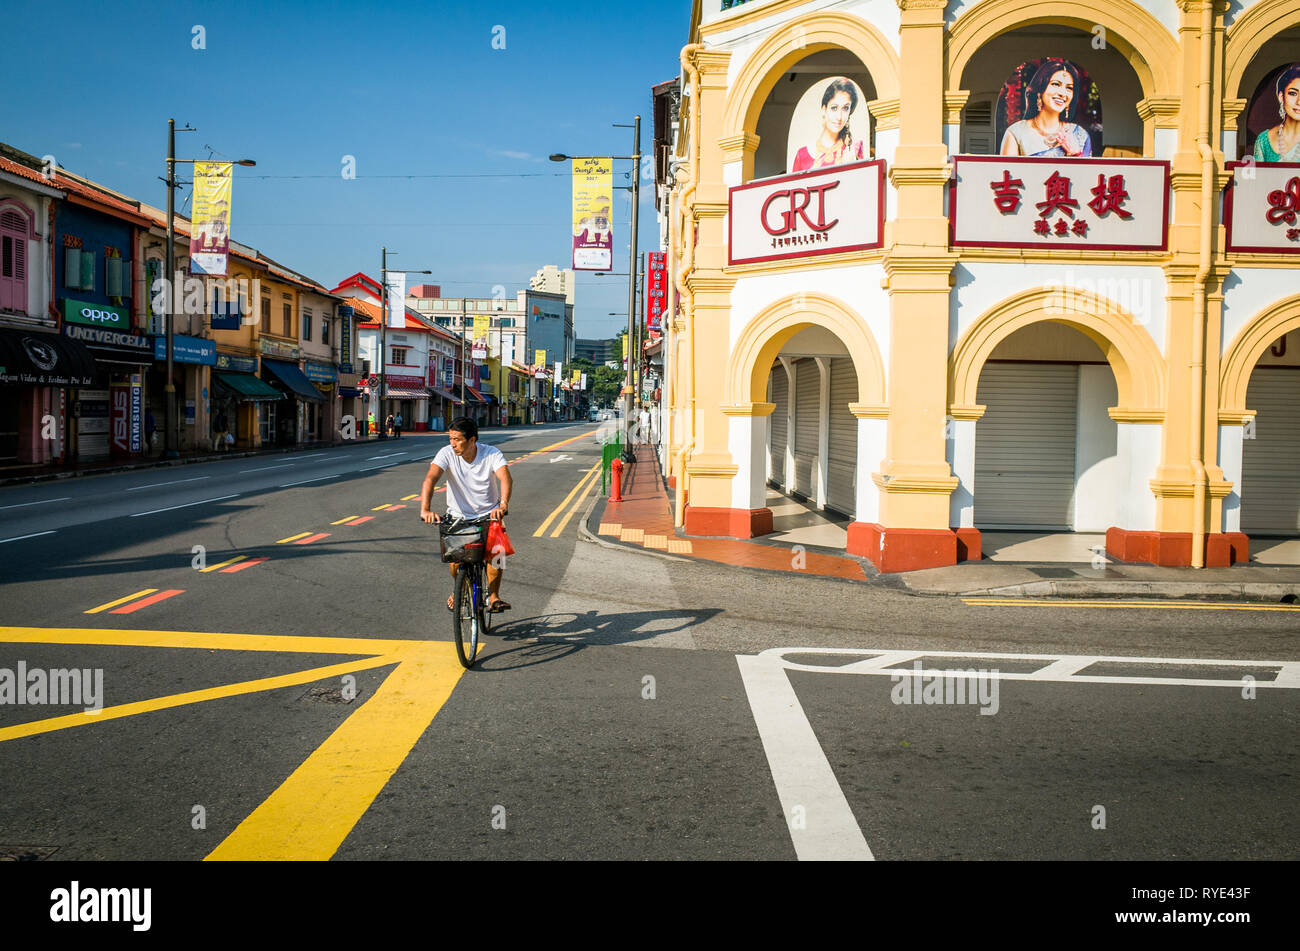 A Chinese man rides his bike across the crosswalk on empty Serangoon Road, Little India - Singapore Stock Photo